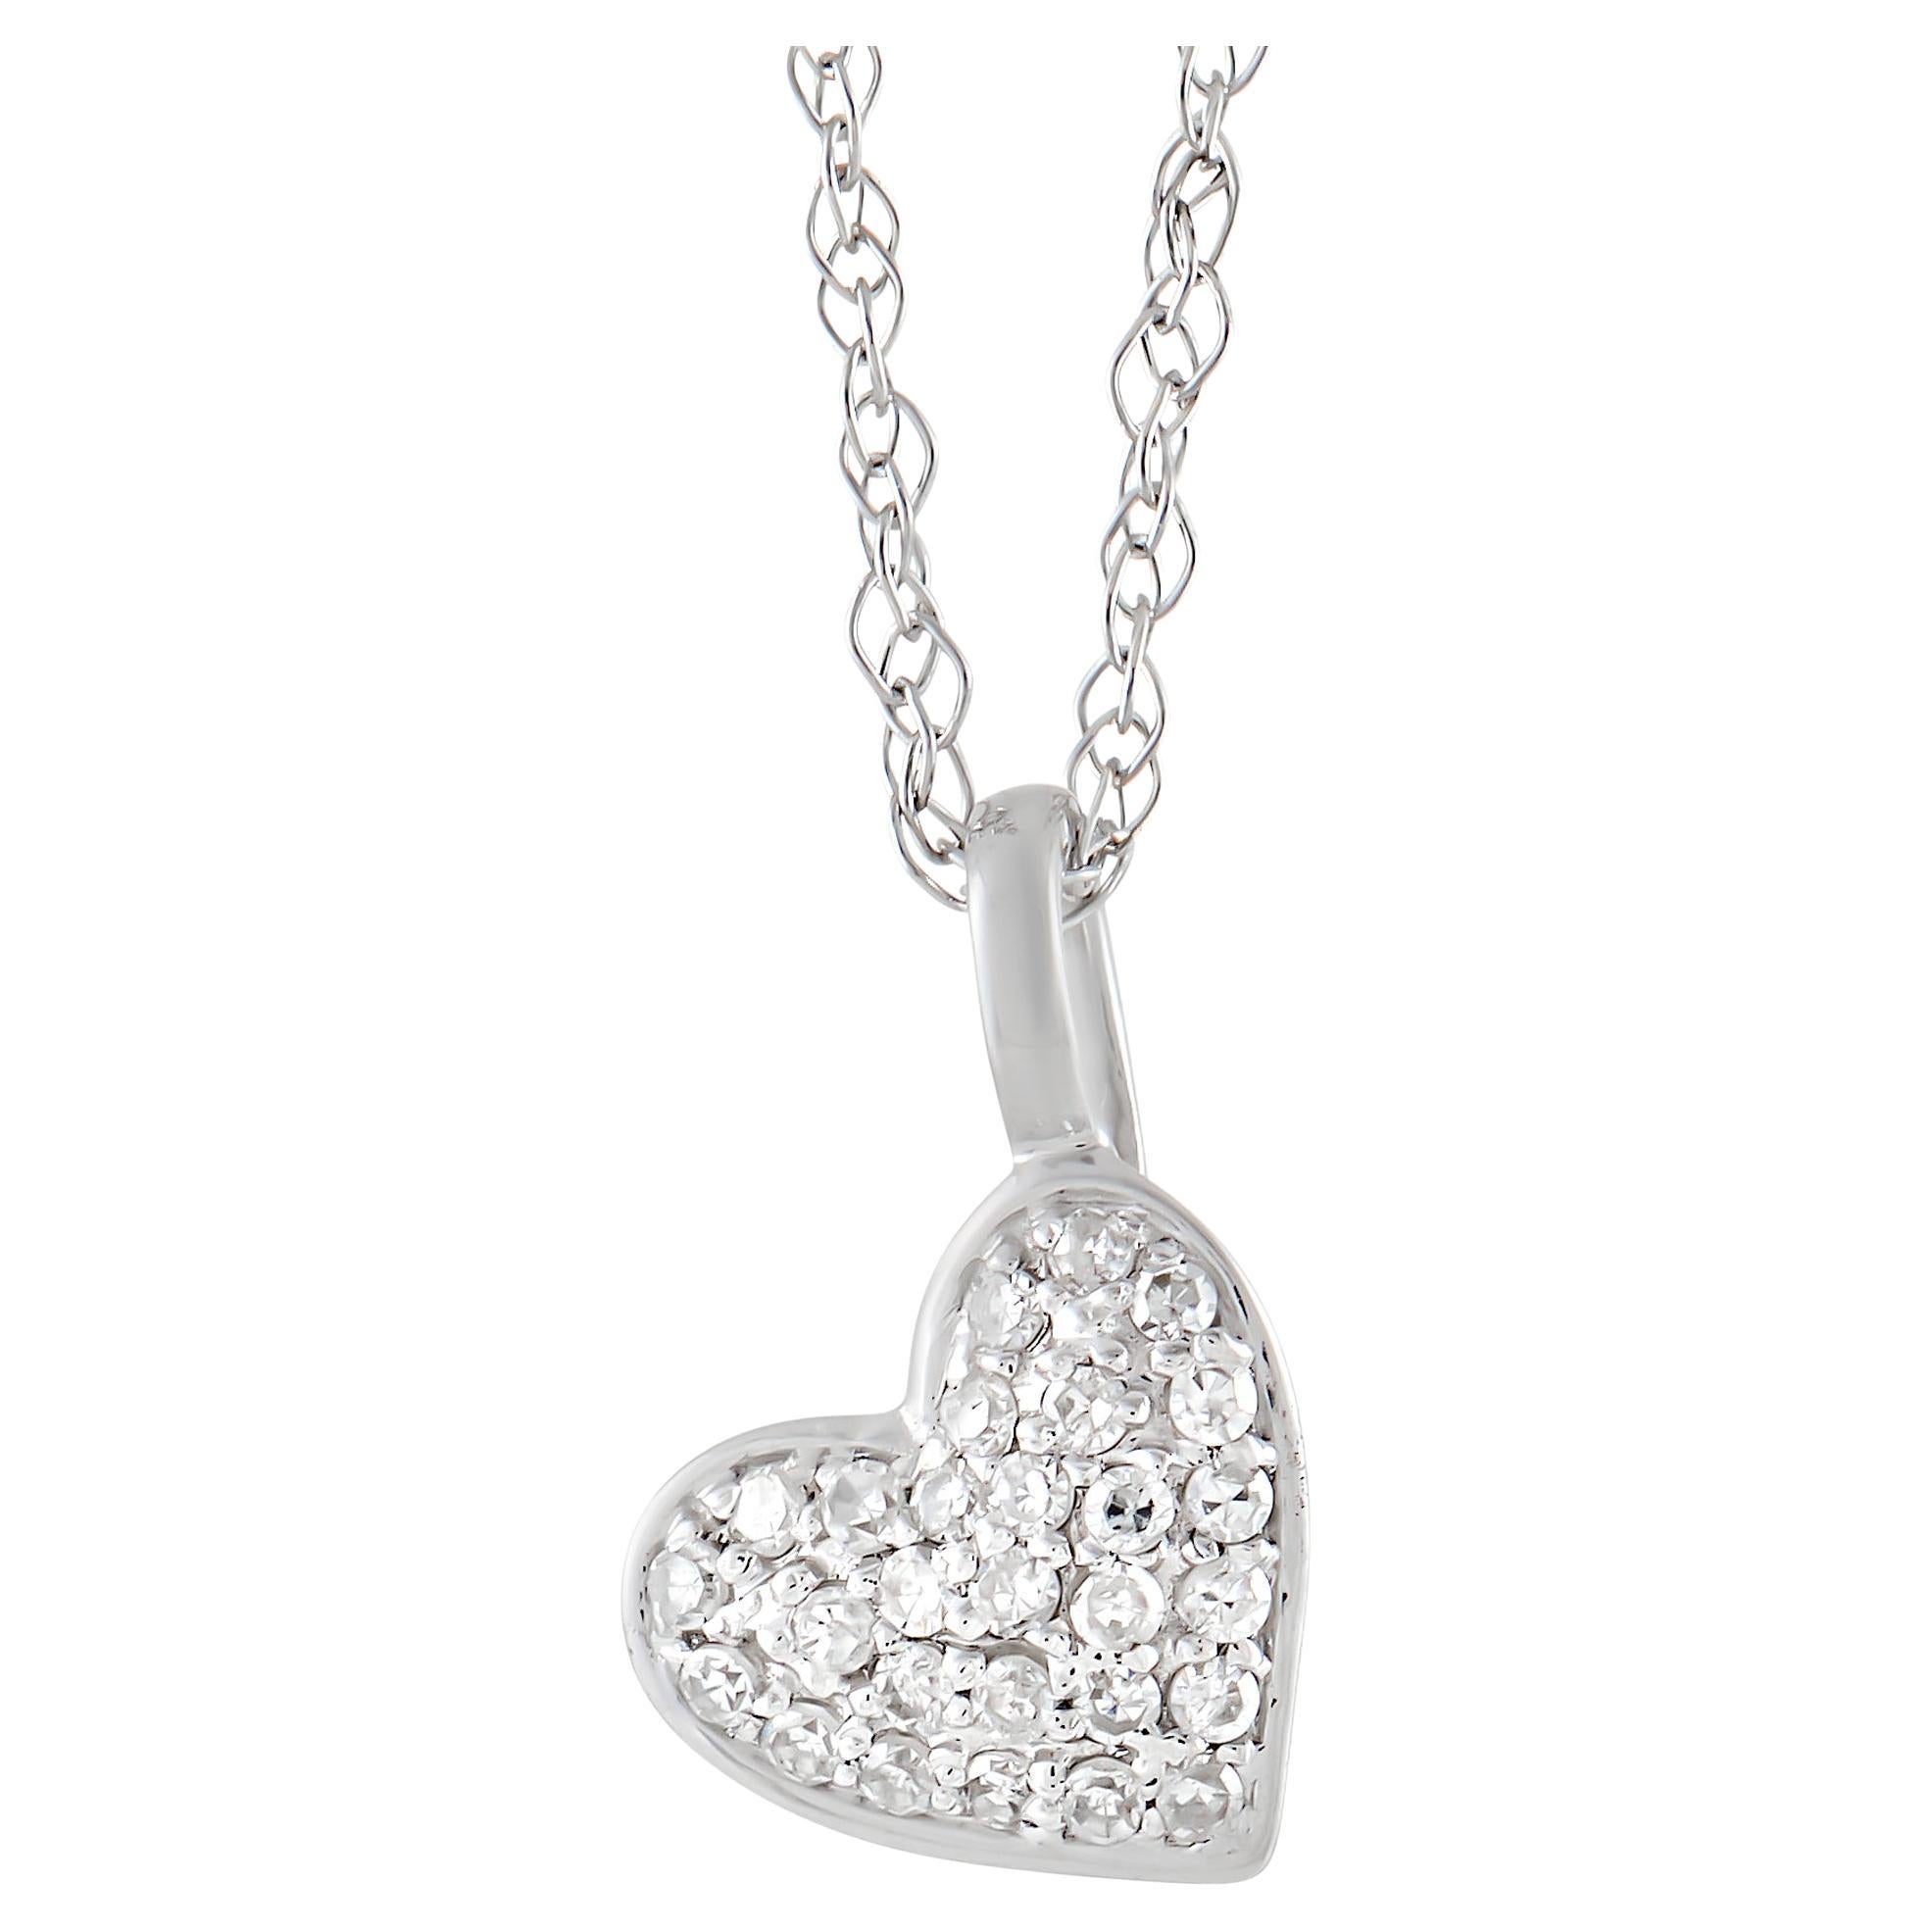 LB Exclusive 14K White Gold 0.06 Ct Diamond Heart Pendant Necklace